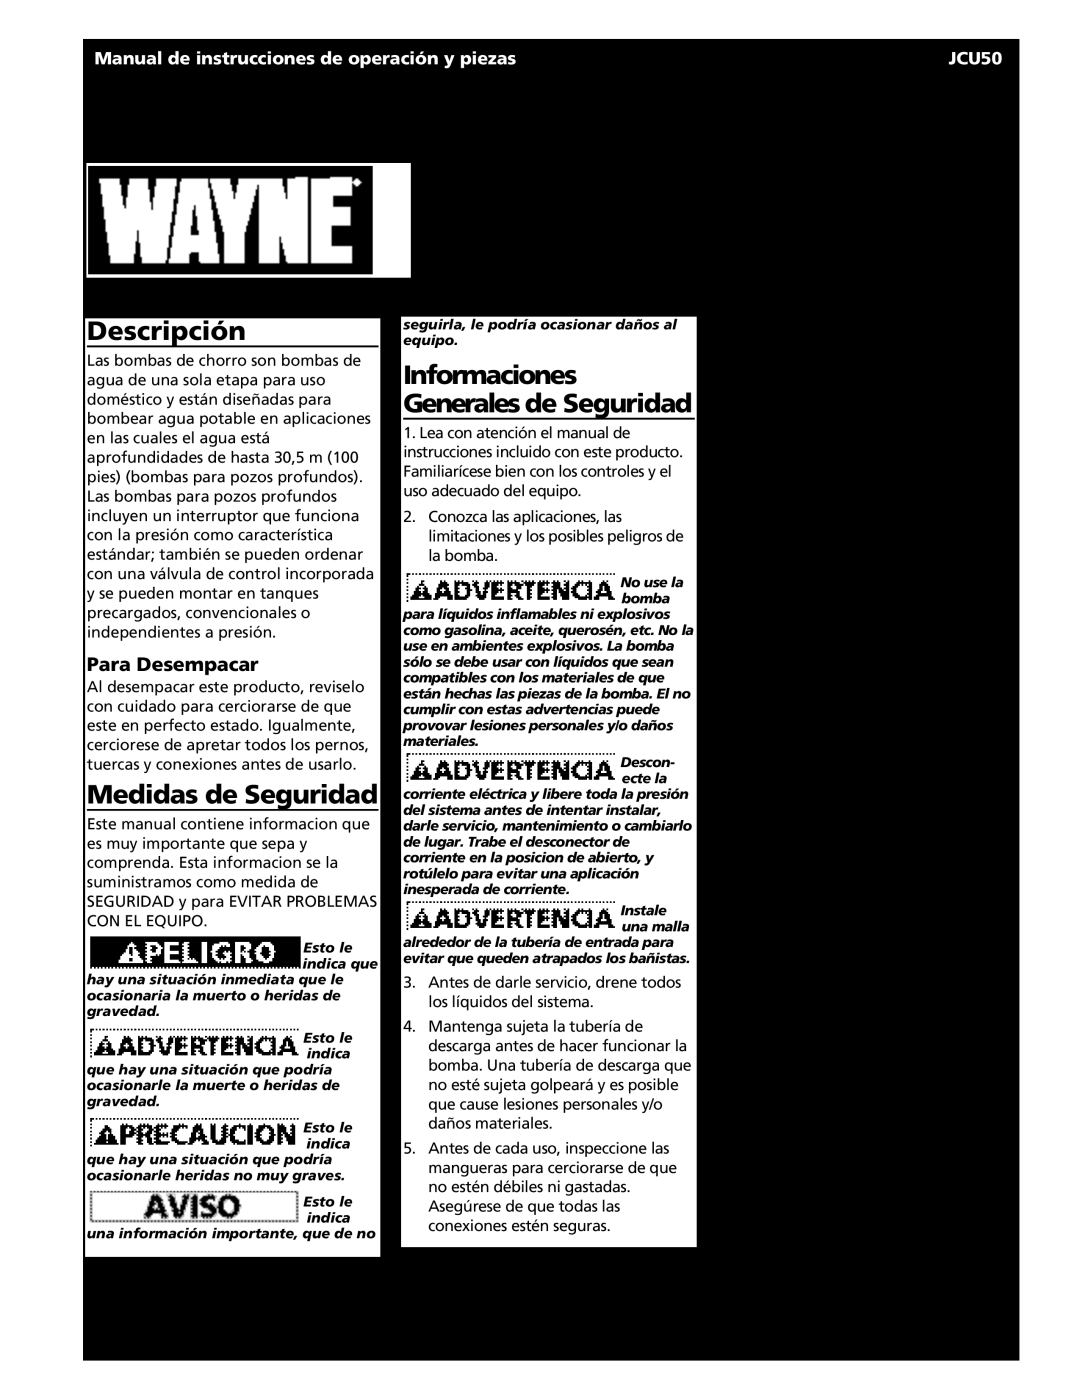 Wayne JCU50 instruction manual Sistemas de Agua Con Bomba de Chorro, Descripción, Medidas de Seguridad, Para Desempacar 